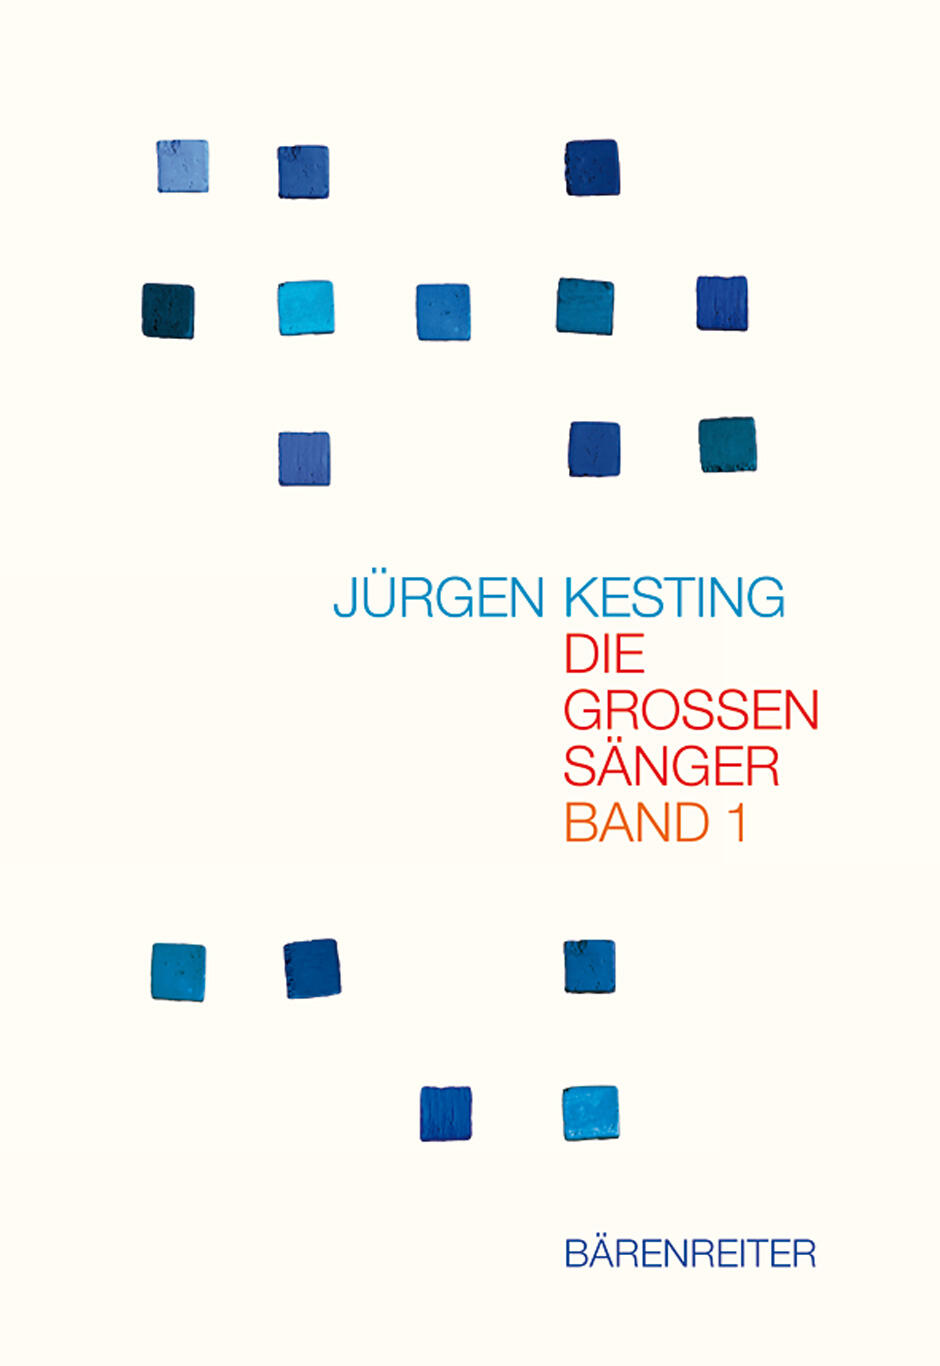 Die grossen Sanger, Band 1-4  Jürgen Kesting  Bärenreiter-Verlag  ENCYCLOPEDIA   German : photo 1